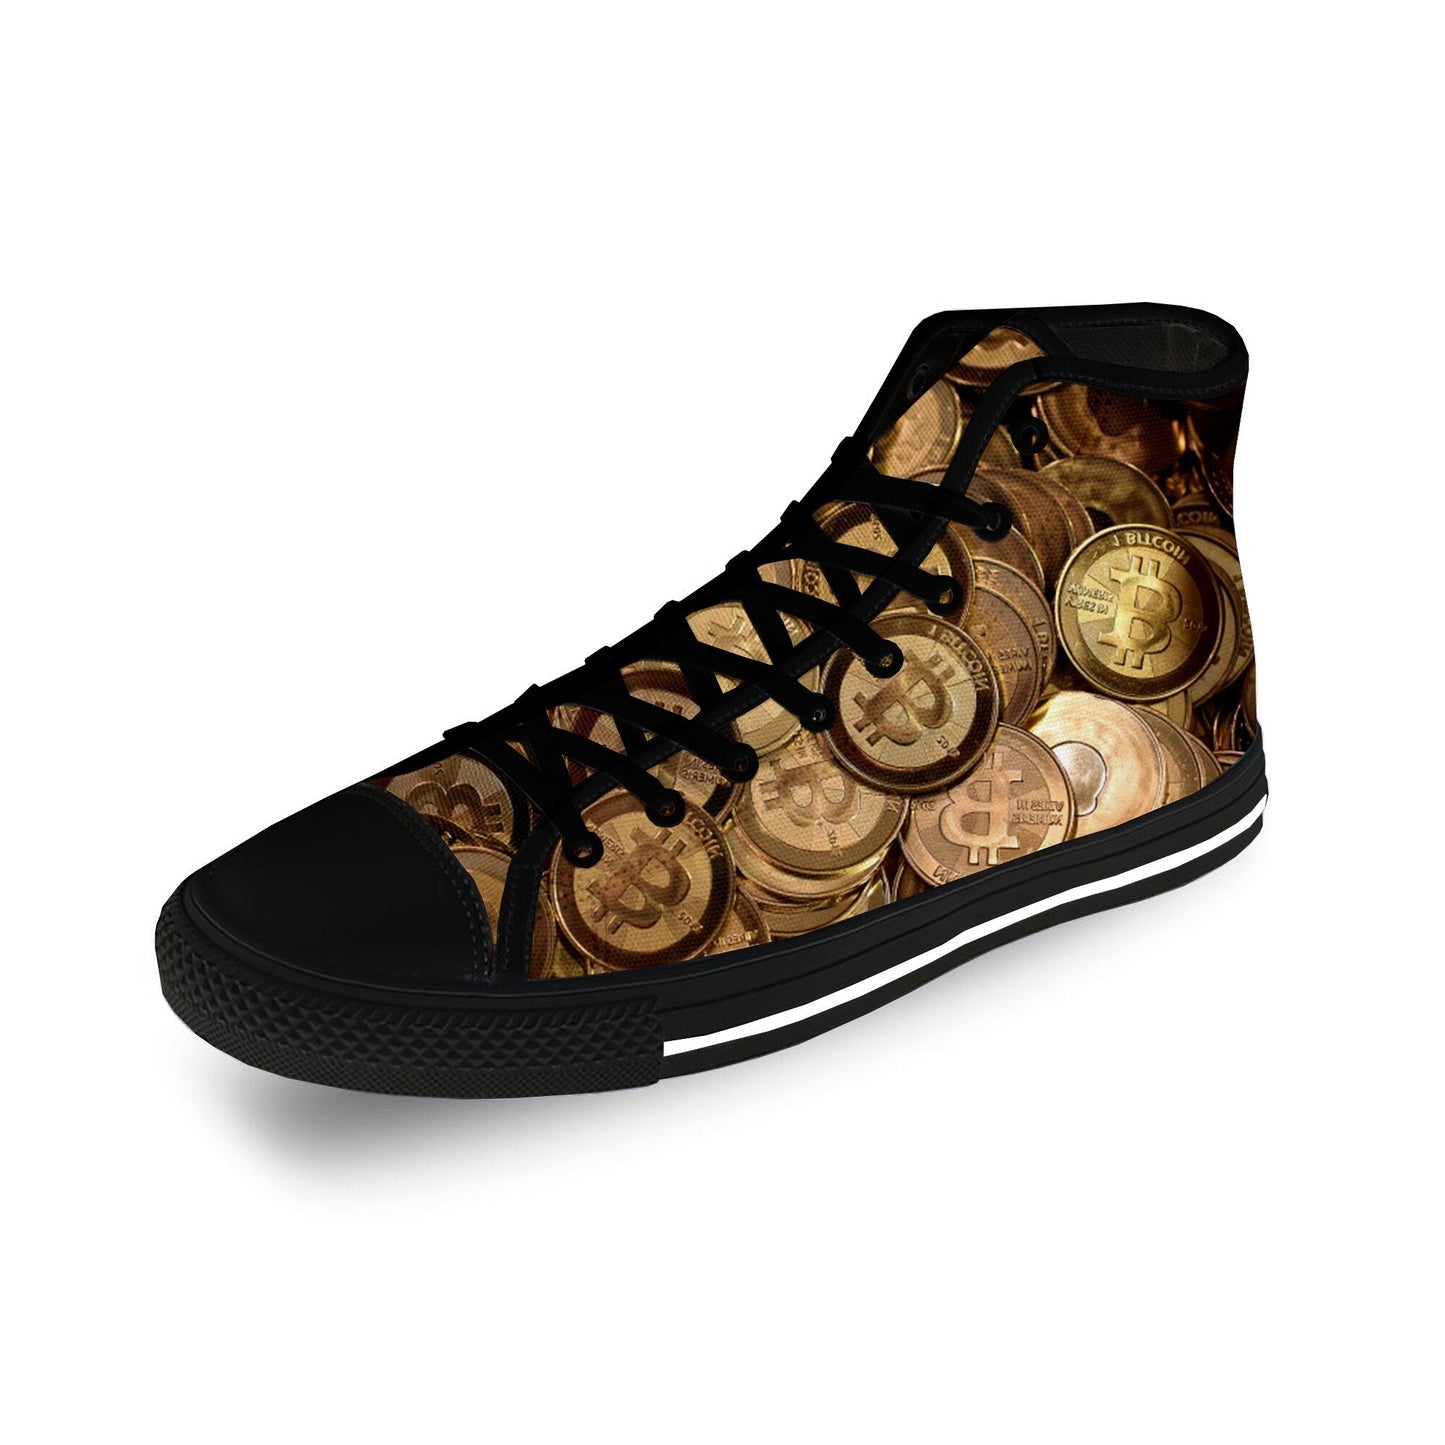 Copy of Bitcoin sneakers 14 designs